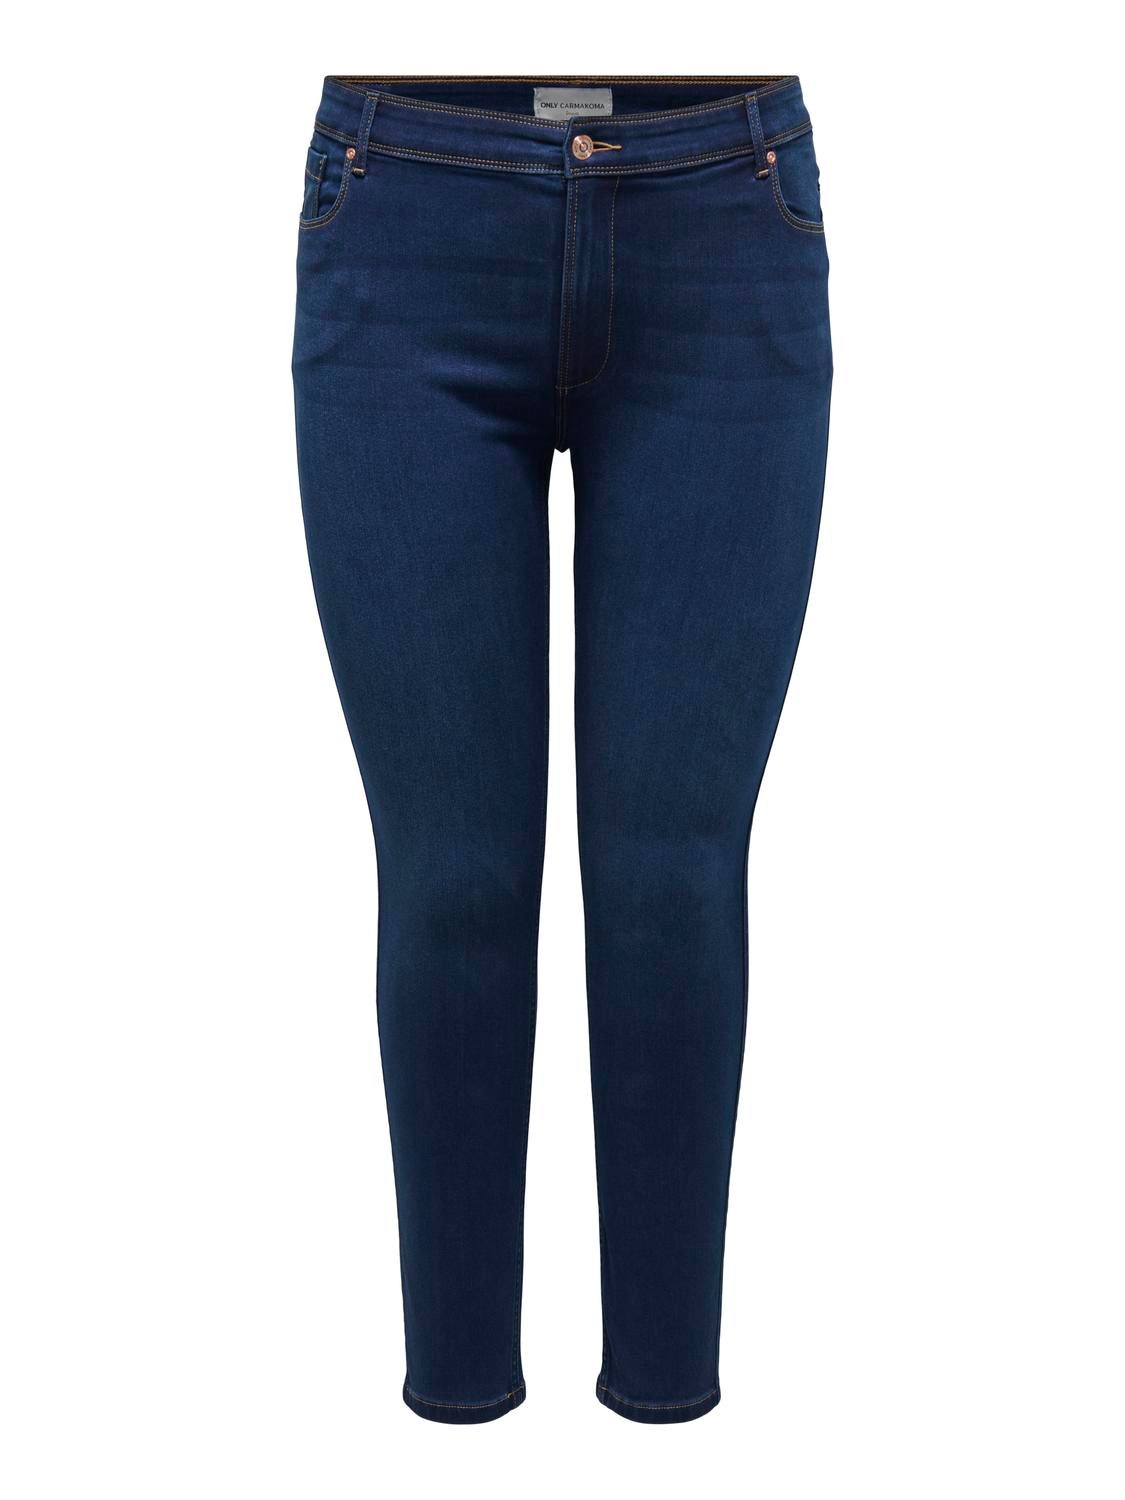 ONLY Jeans Skinny Fit Vita media -Dark Blue Denim - 15307666